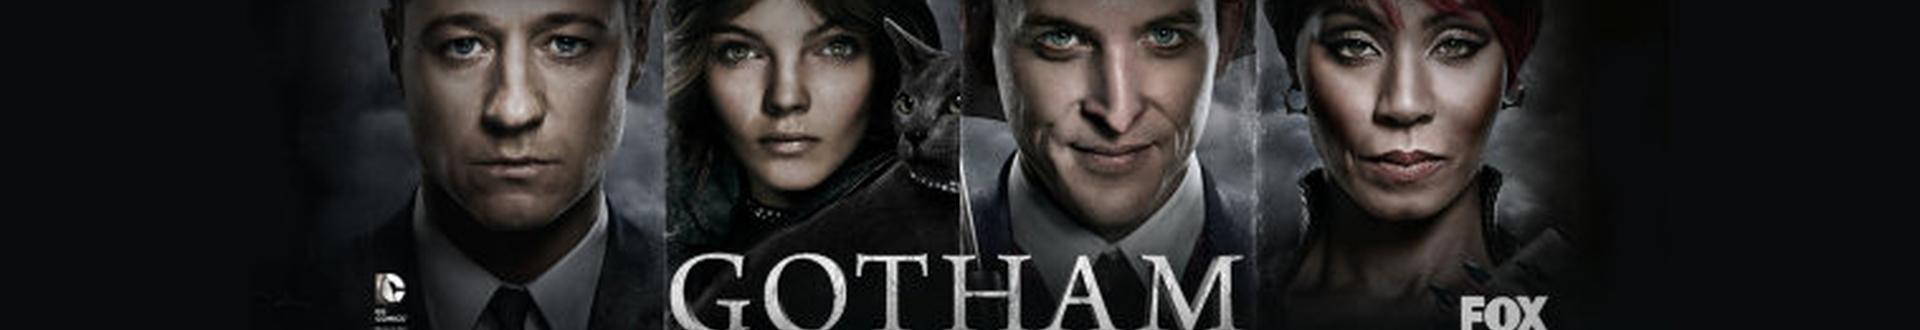 Image illustrative de Gotham